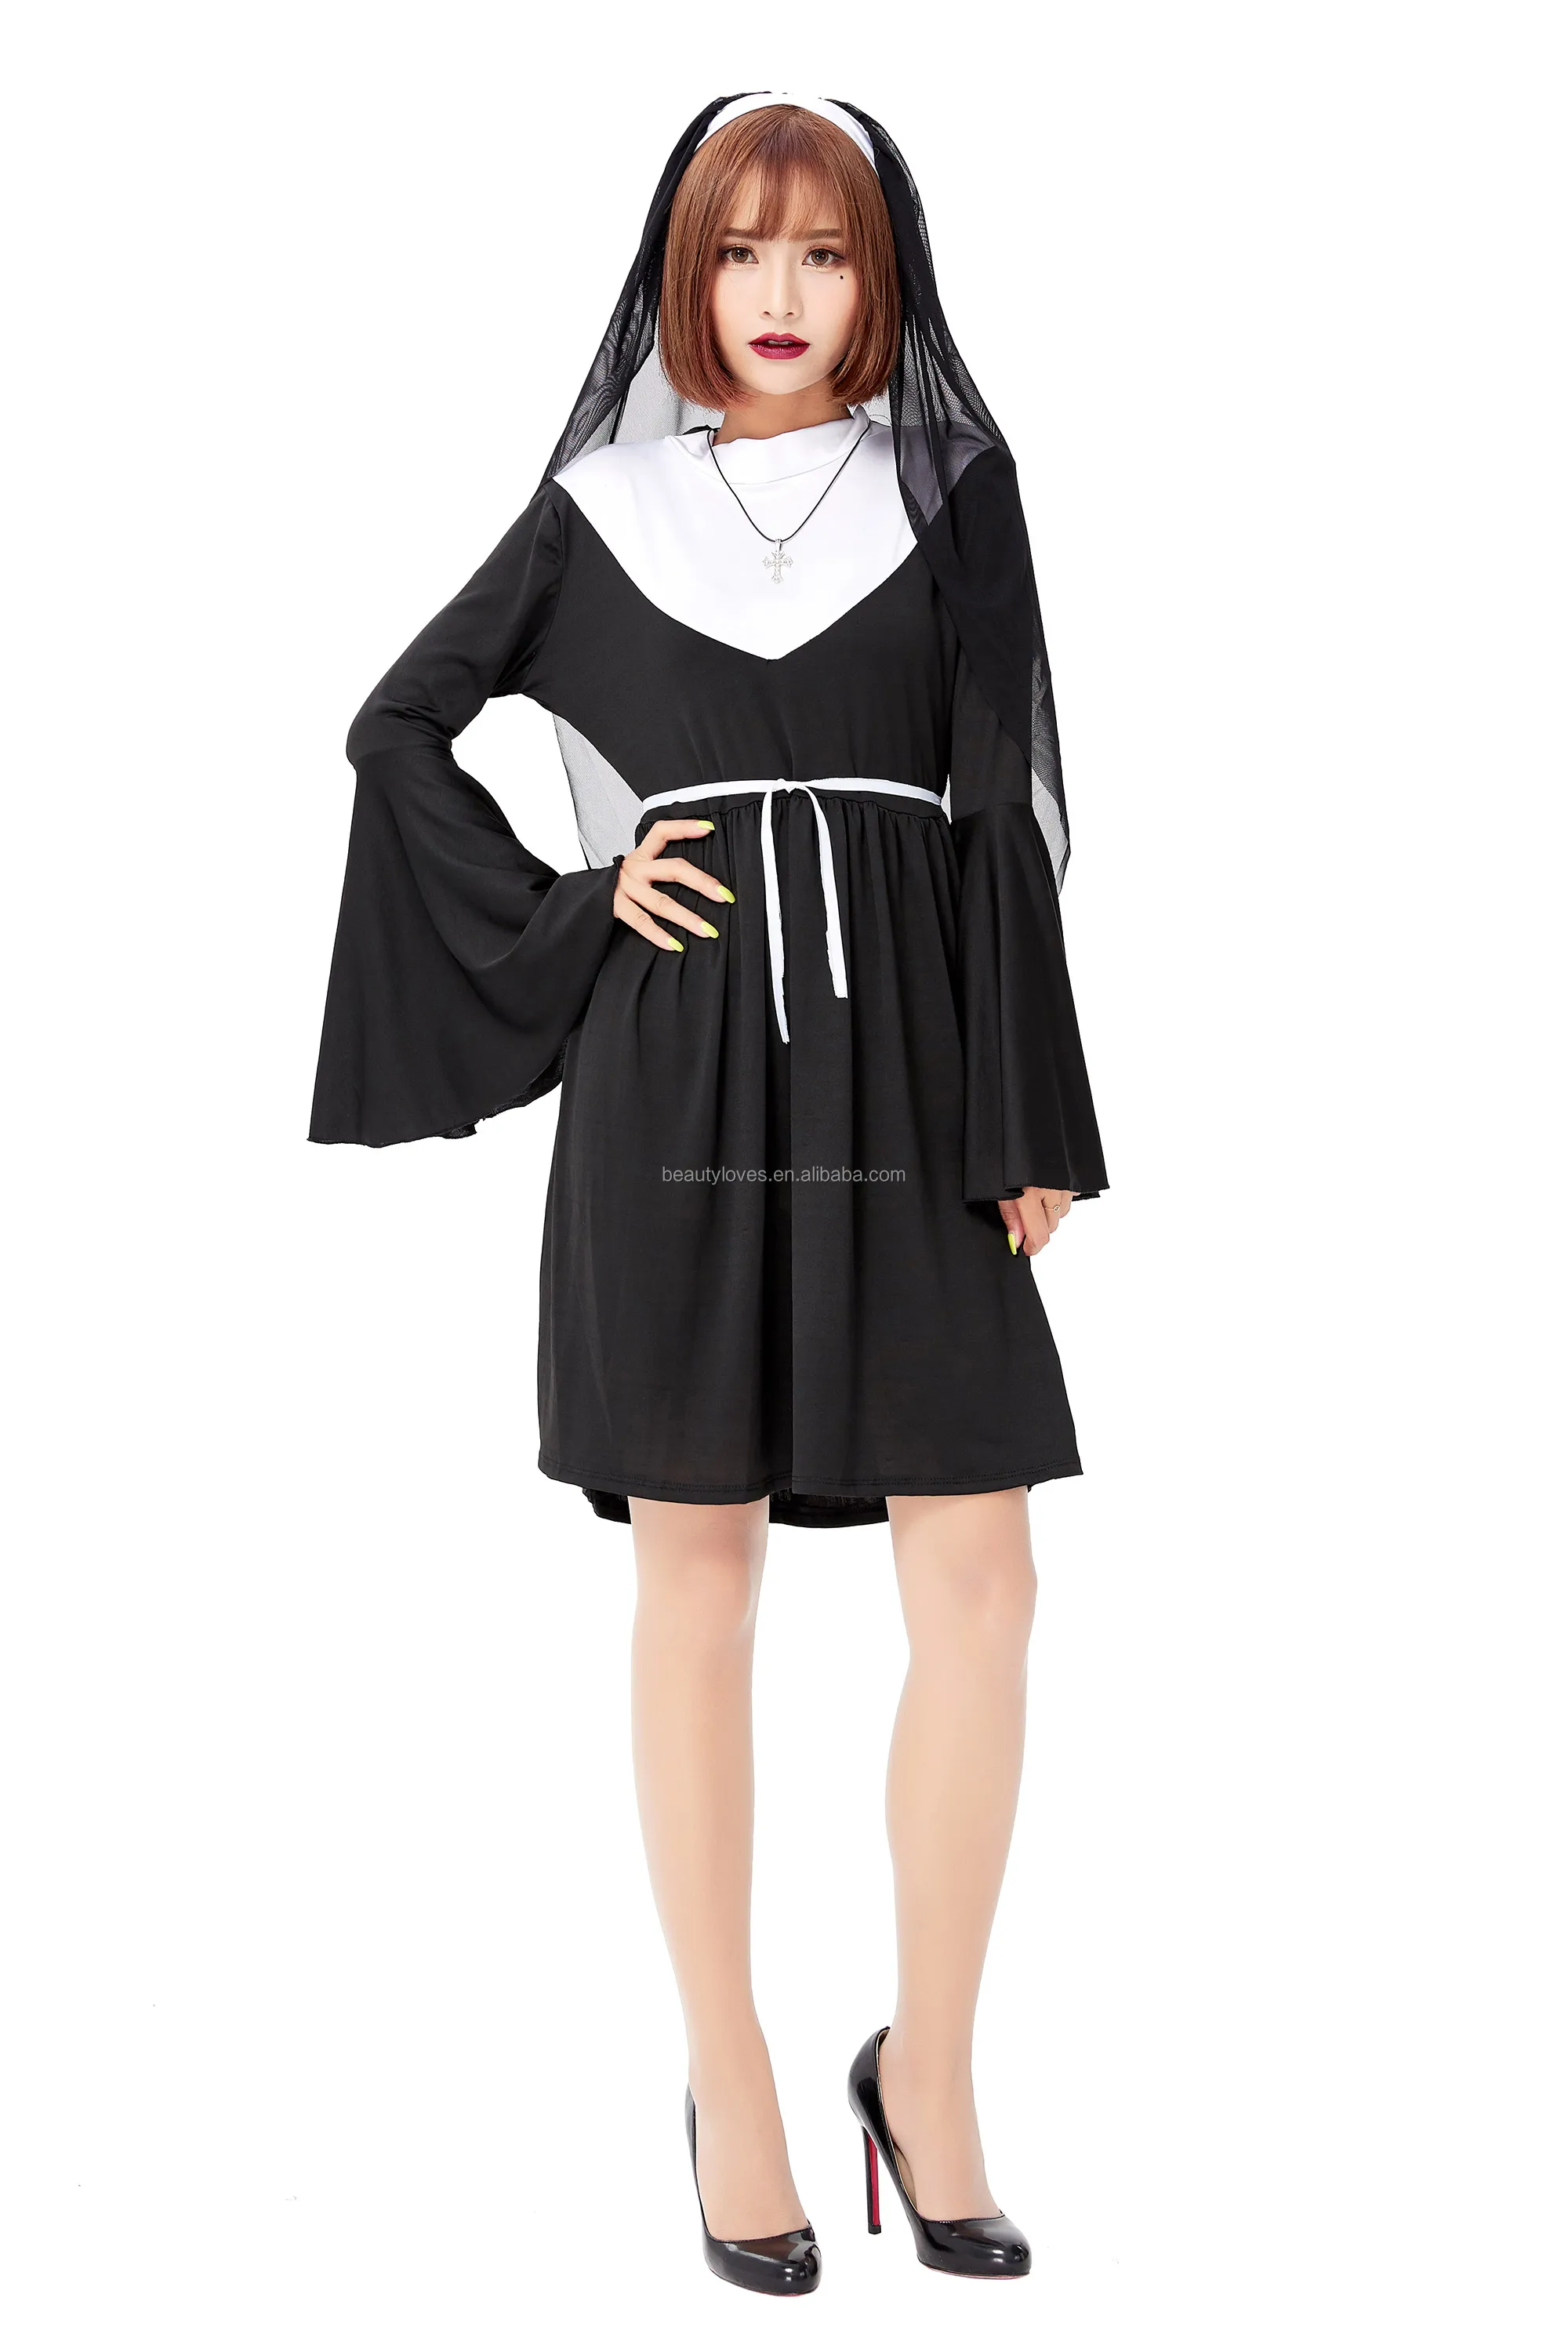 Nun Kit Adult Headpiece & Collar Ladies Fancy Dress Hen Party Costume Accessory 